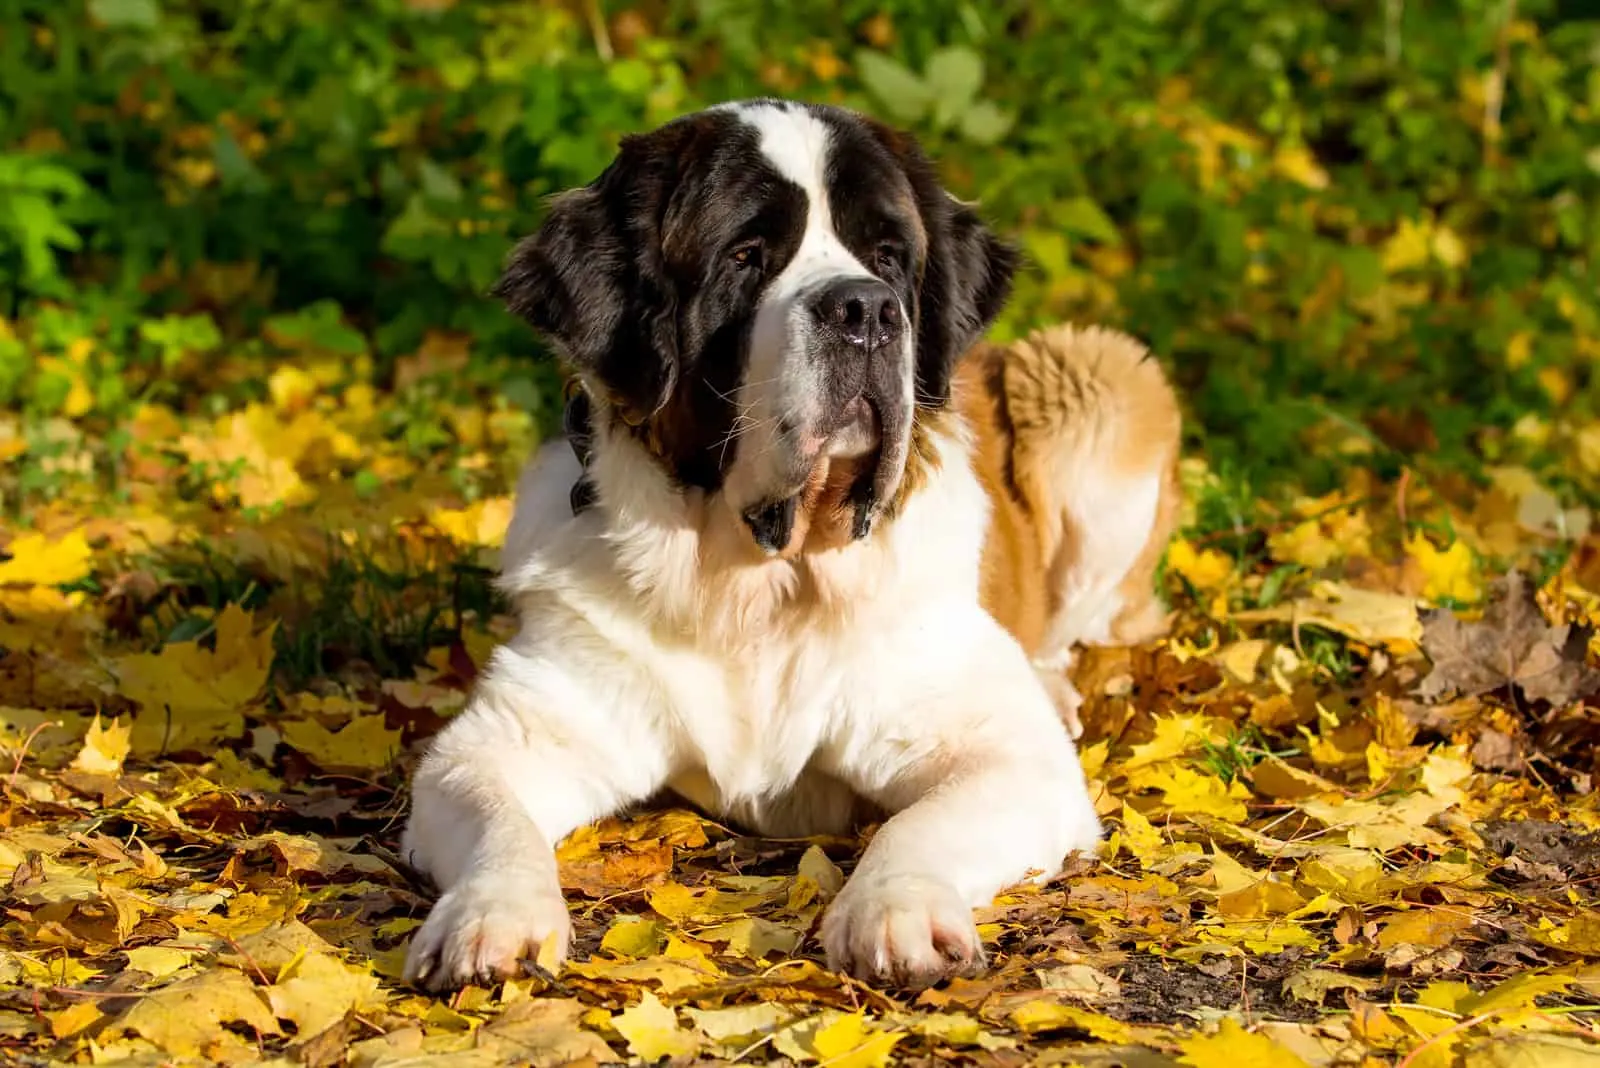 Saint Bernard dog lies on dry leaves in autumn